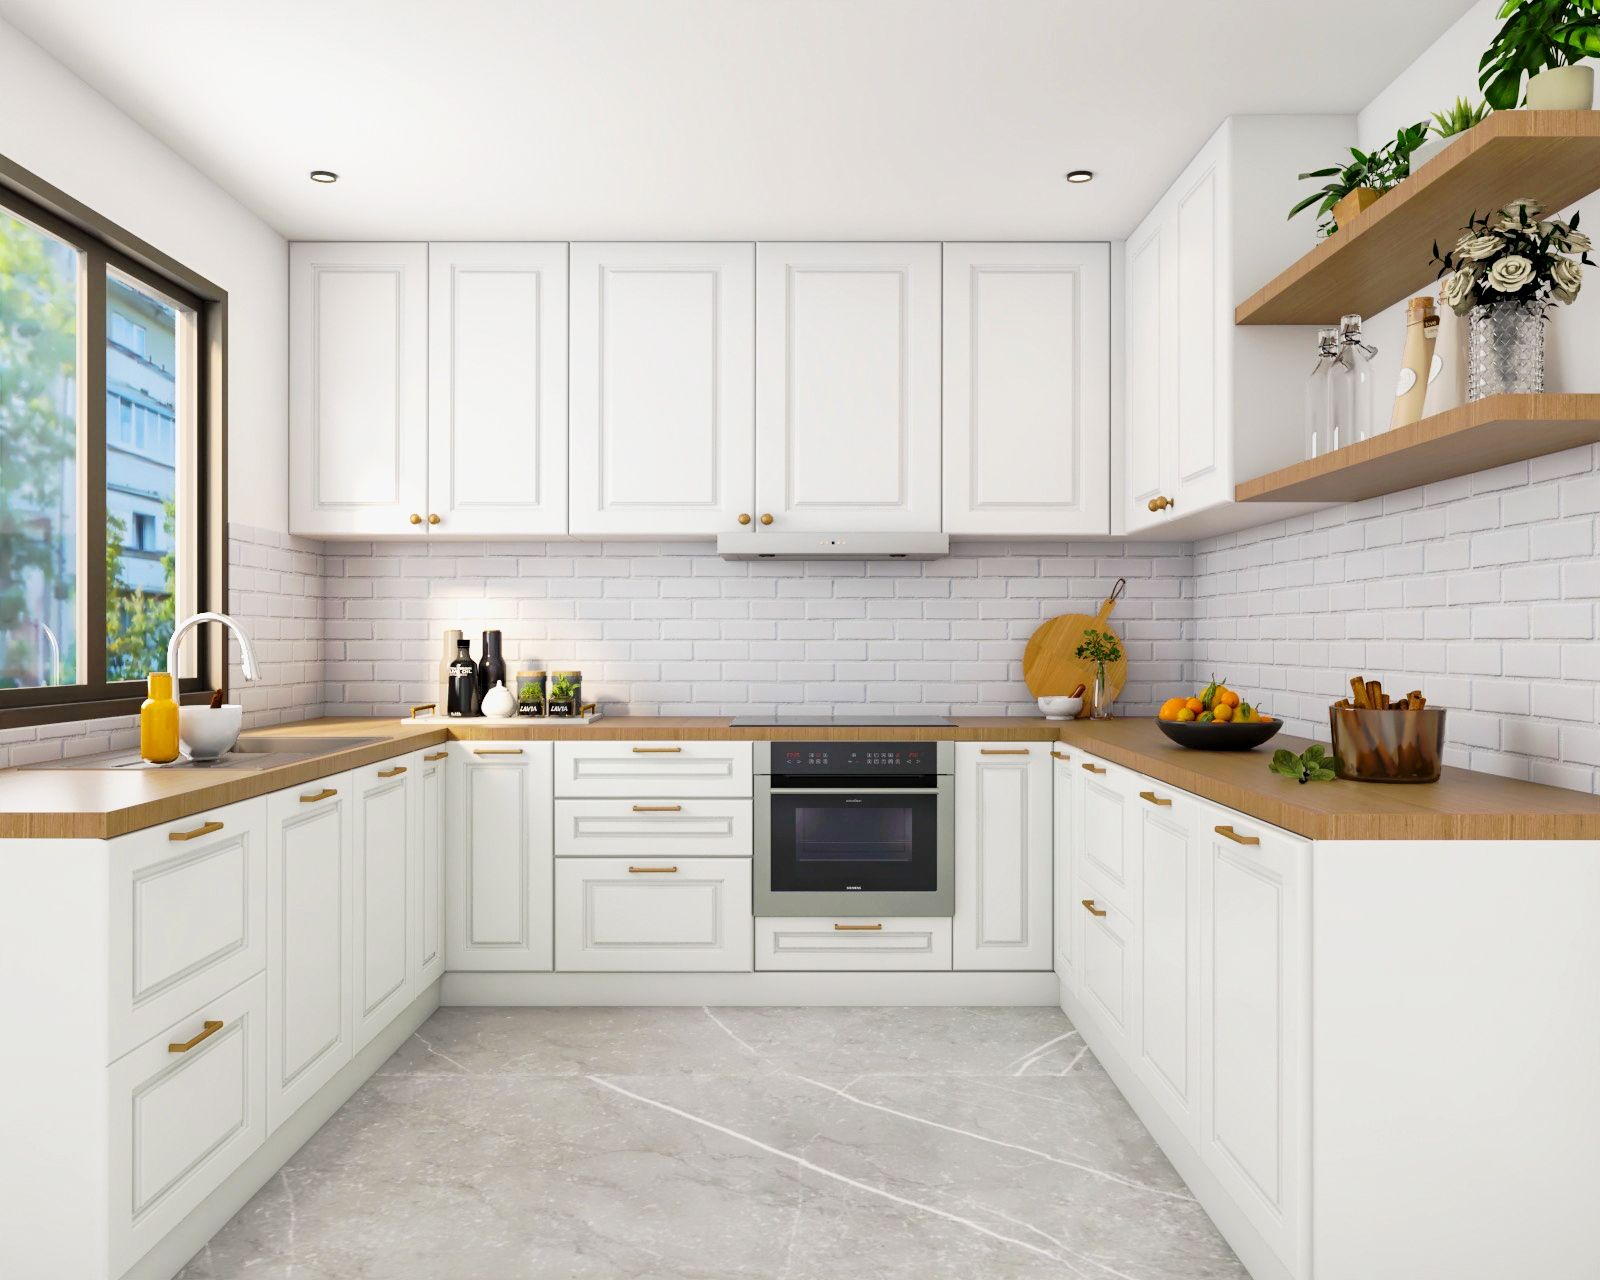 Contemporary White Kitchen Tile Design With Rectangular Glossy Ceramic Tiles